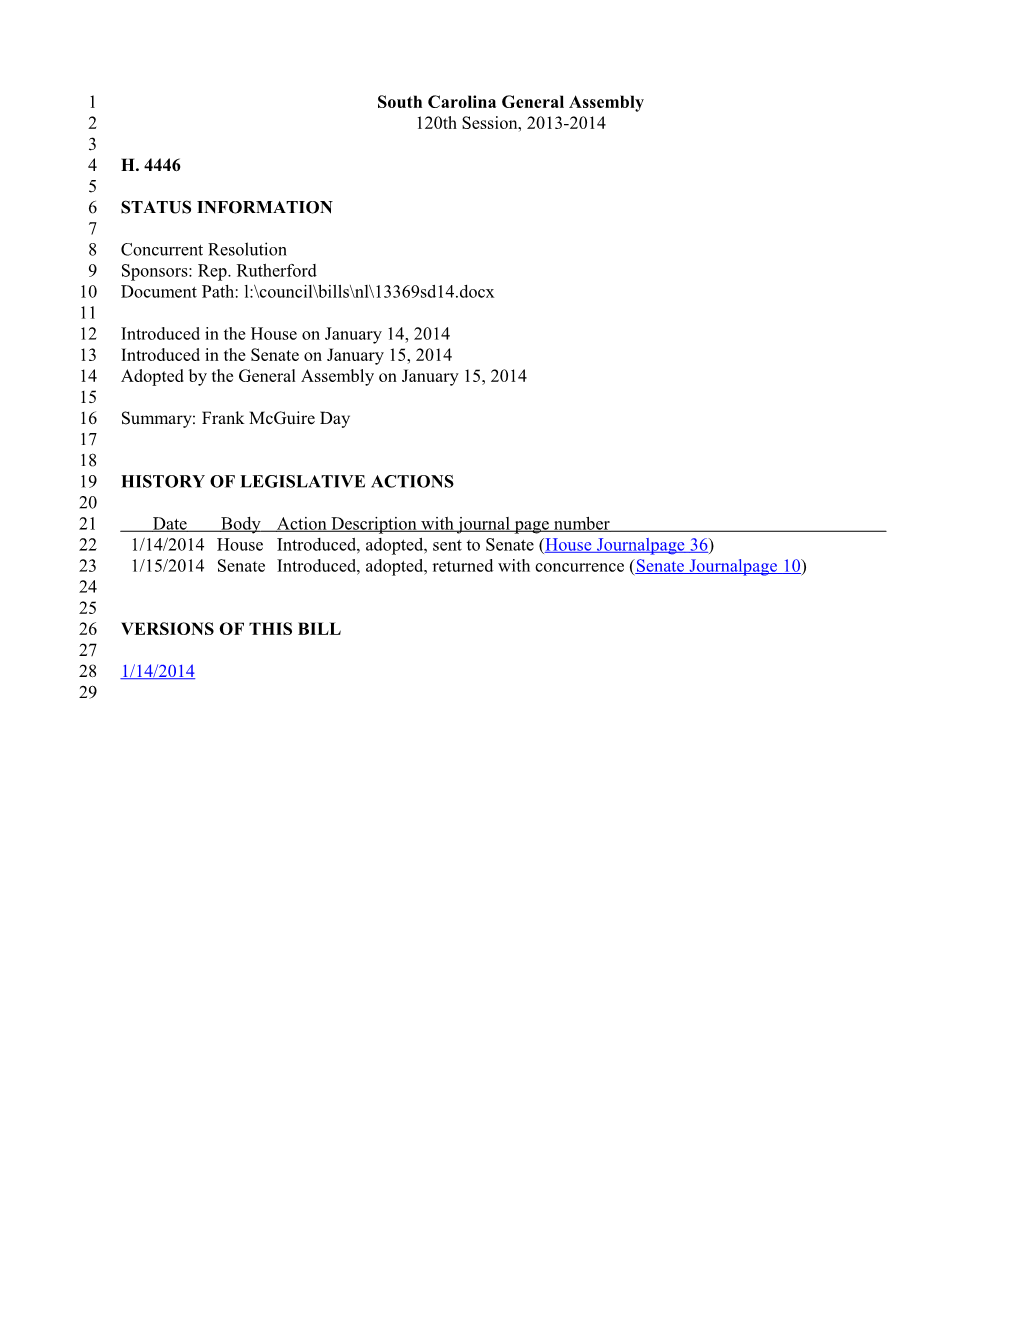 2013-2014 Bill 4446: Frank Mcguire Day - South Carolina Legislature Online